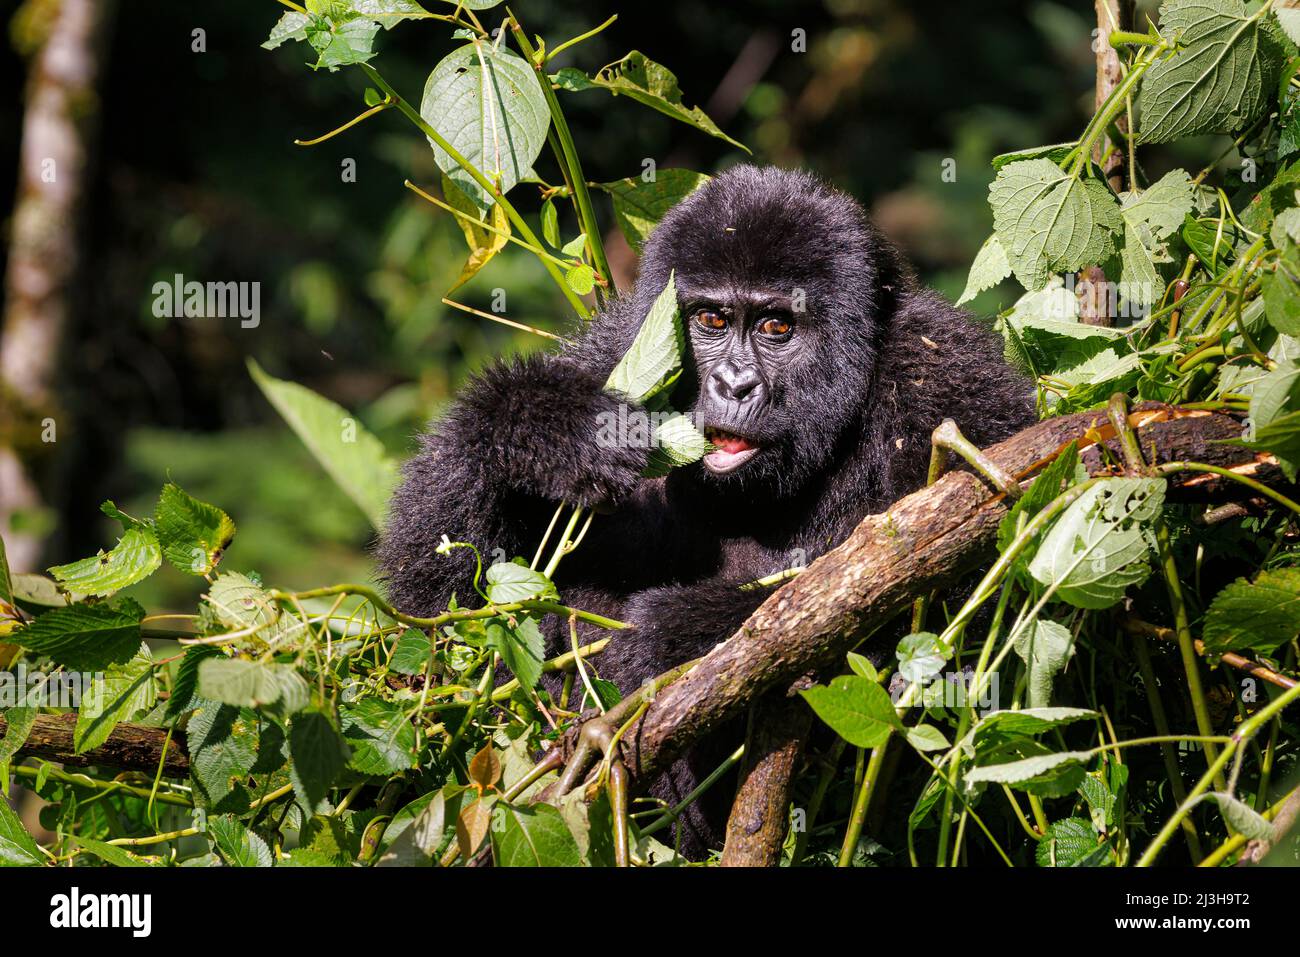 Uganda, distrito de Kanungu, Ruhija, Parque Nacional impenetrable de Bwindi, declarado Patrimonio de la Humanidad por la UNESCO, gorila de montaña Foto de stock